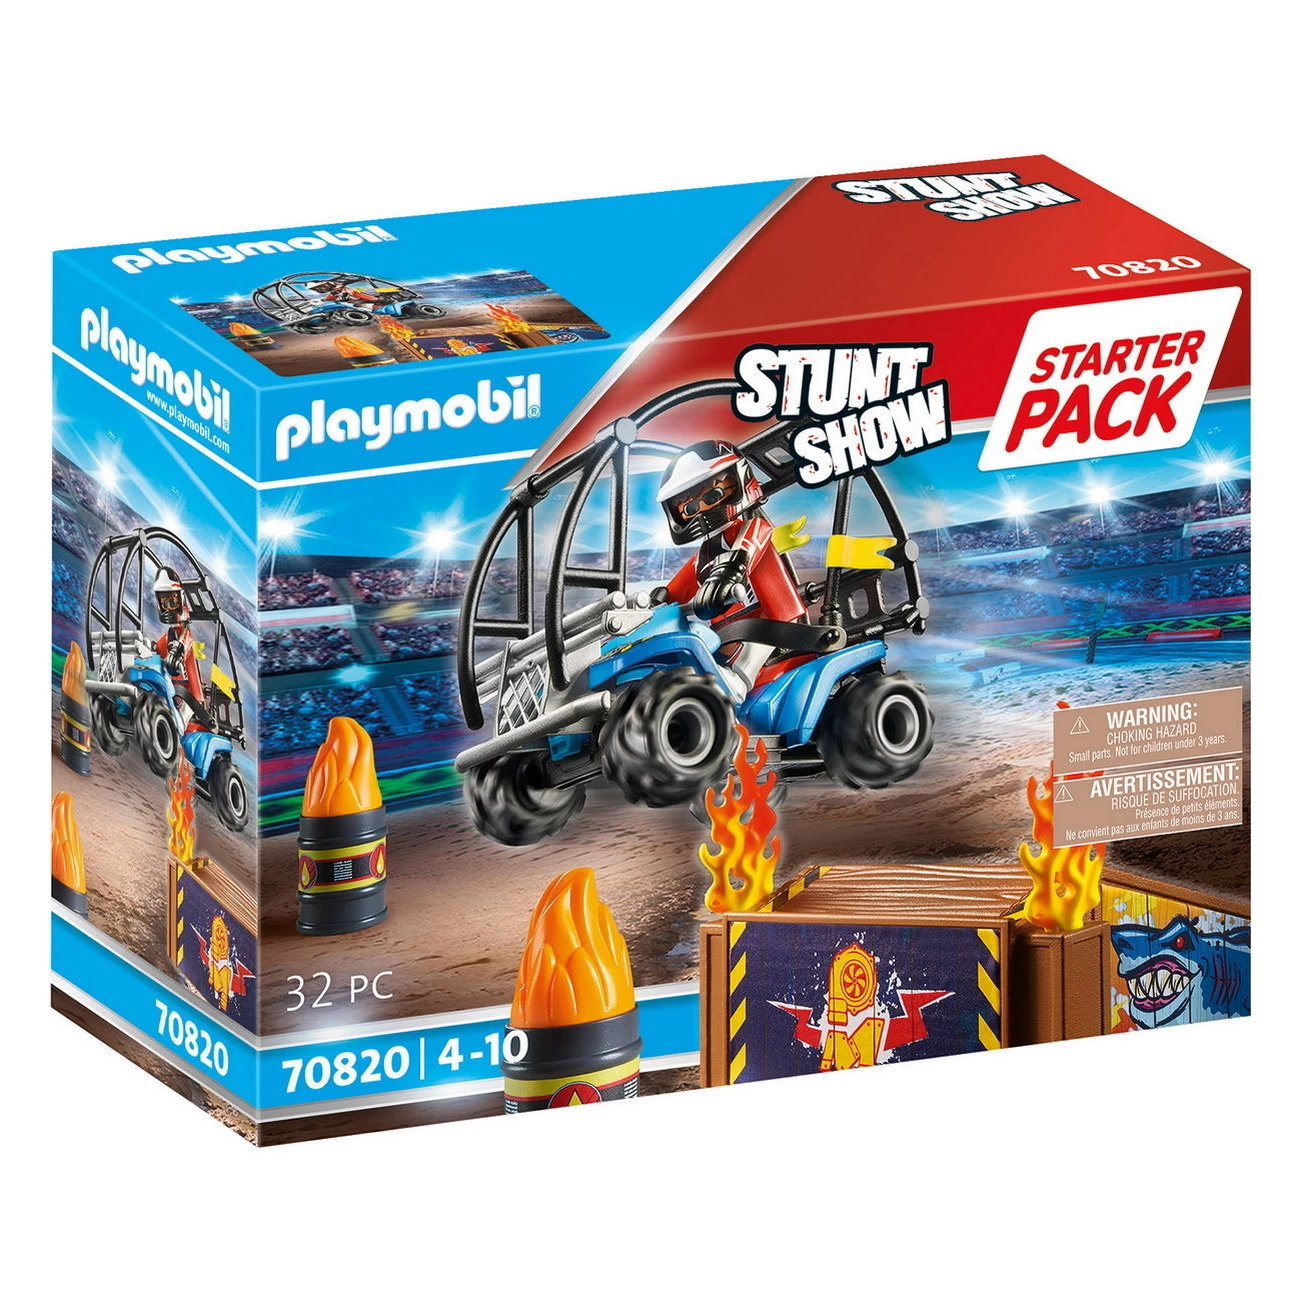 Playmobil 70820 - StarterPack Stuntshow Quad mit Feuerrampe